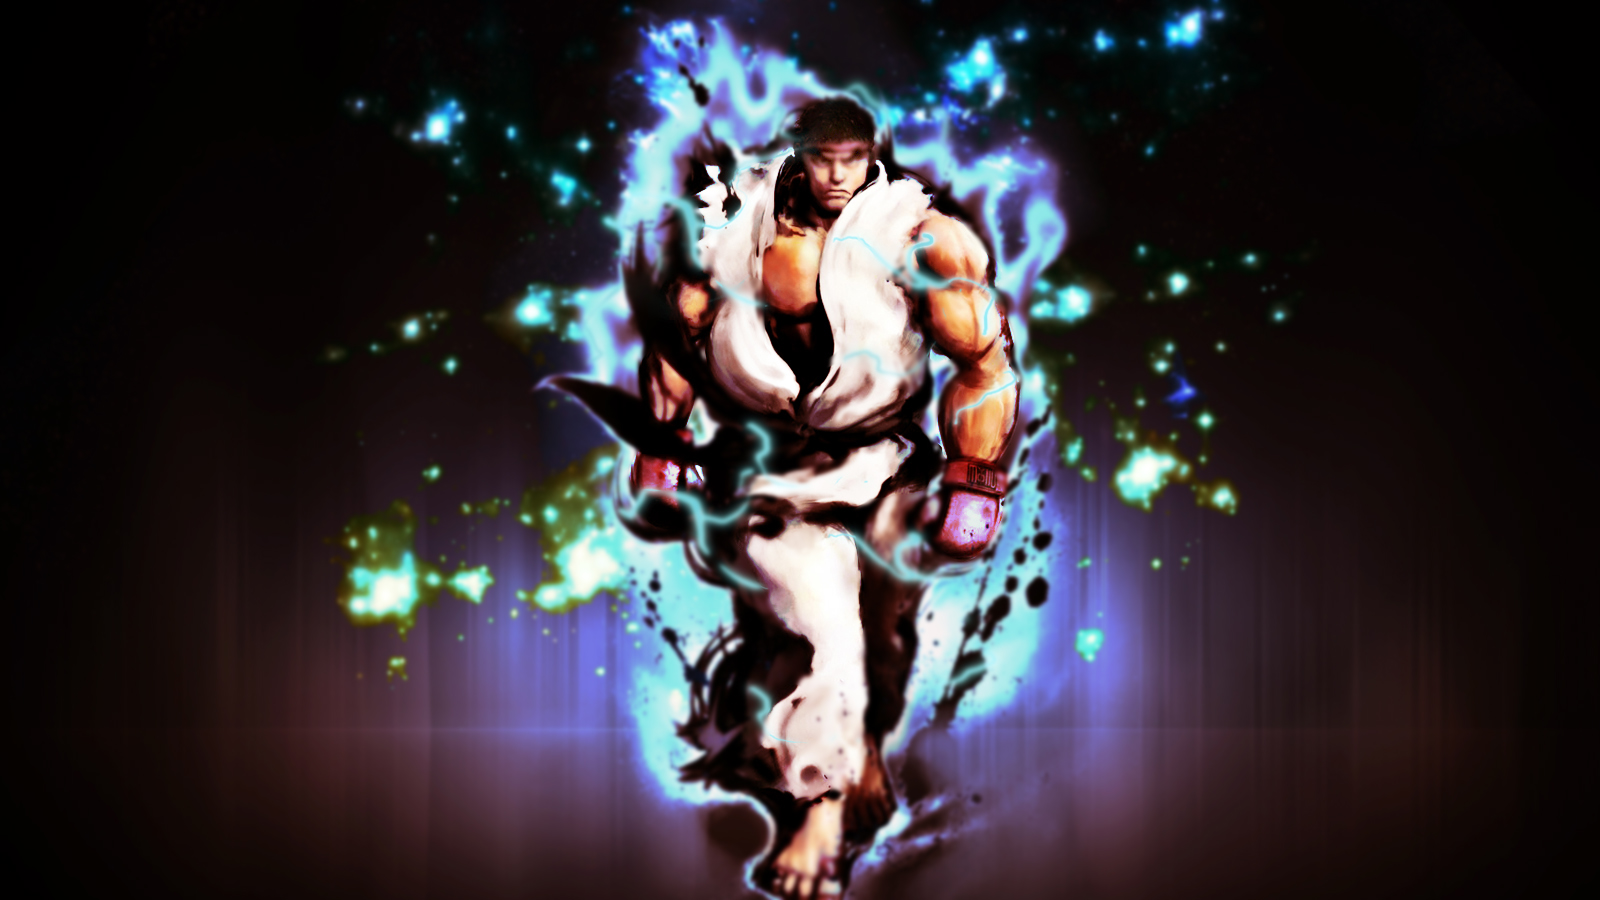 Street fighter: Ryu by NaXeL13 on DeviantArt